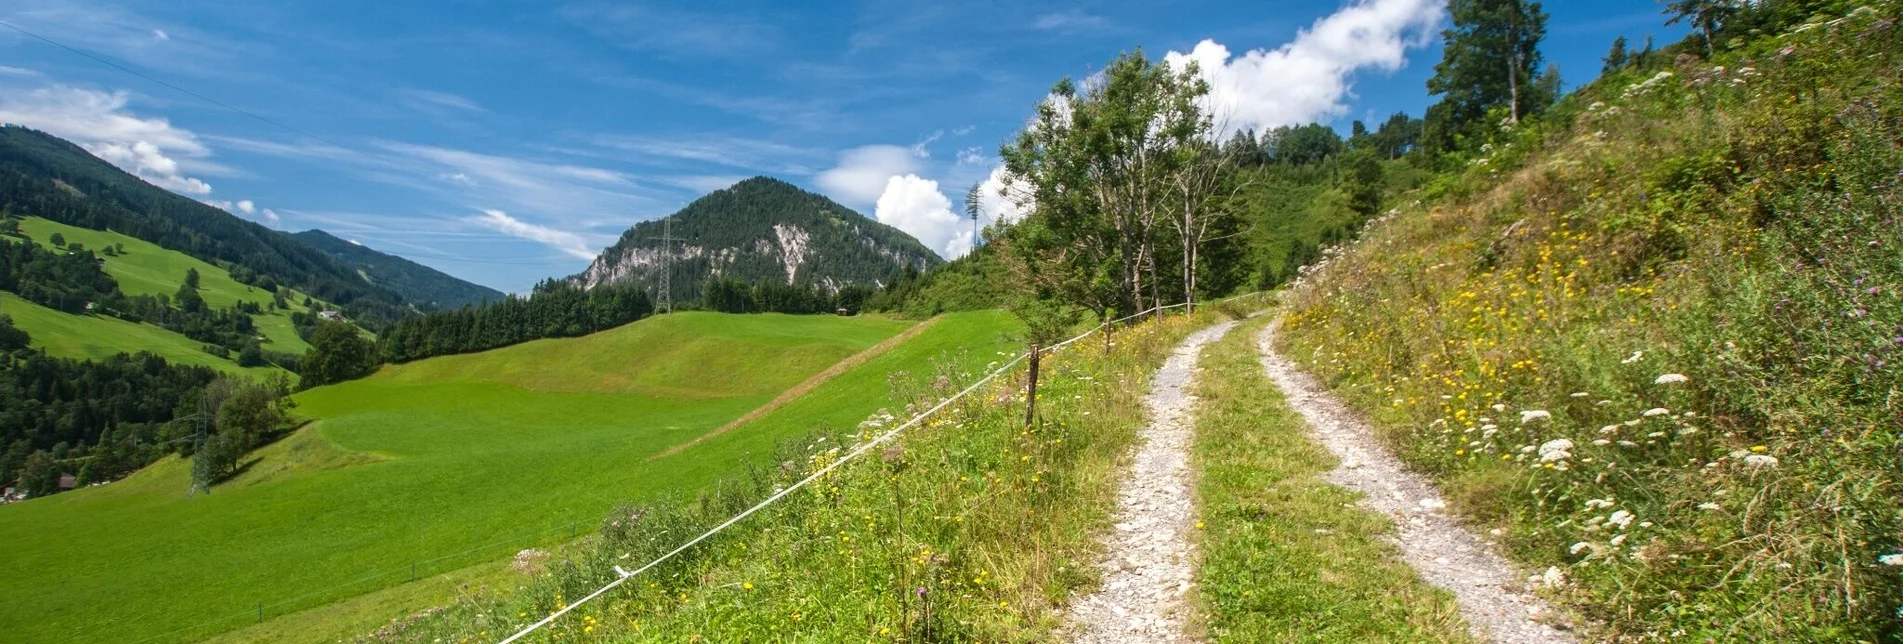 Hiking route Pichl Trail - Touren-Impression #1 | © Gerhard Pilz